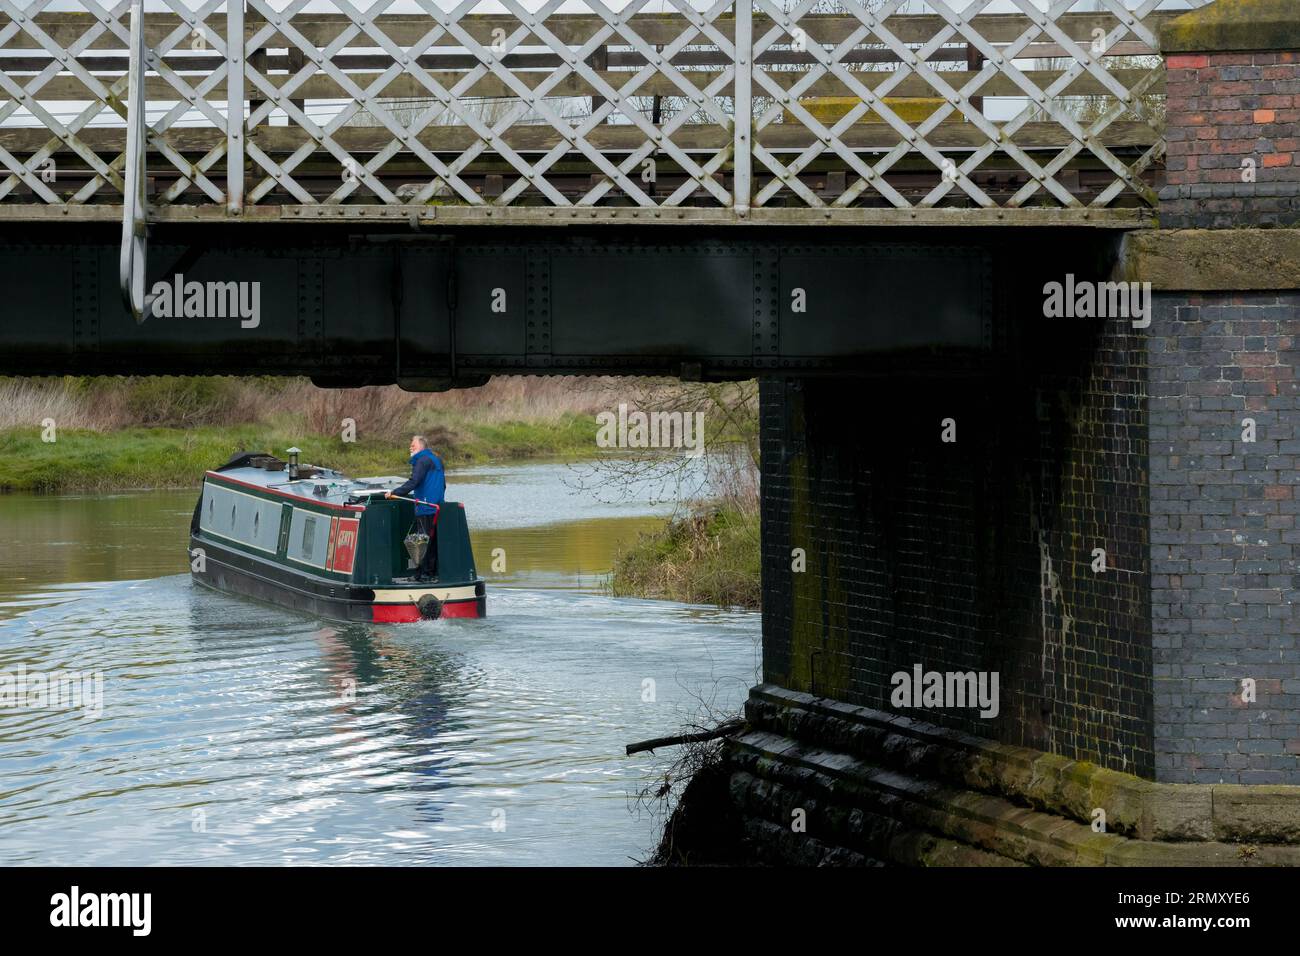 Canal ride pass into tunnel at Nene Railway bridge, UK Stock Photo